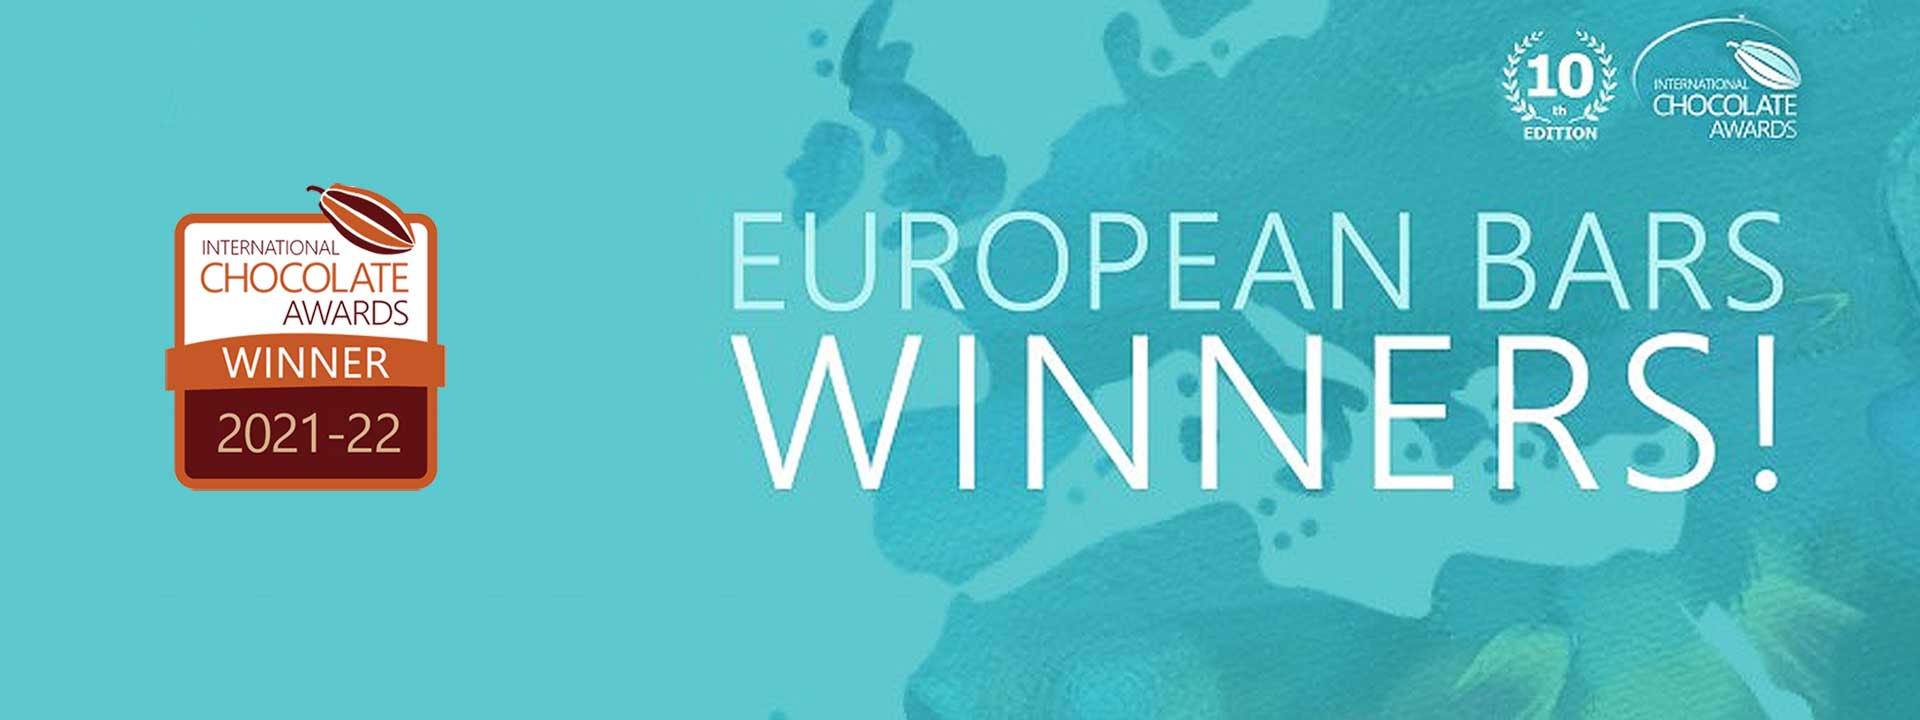 European </br> Bean-To-Bar </br> Gewinner Schokoladen